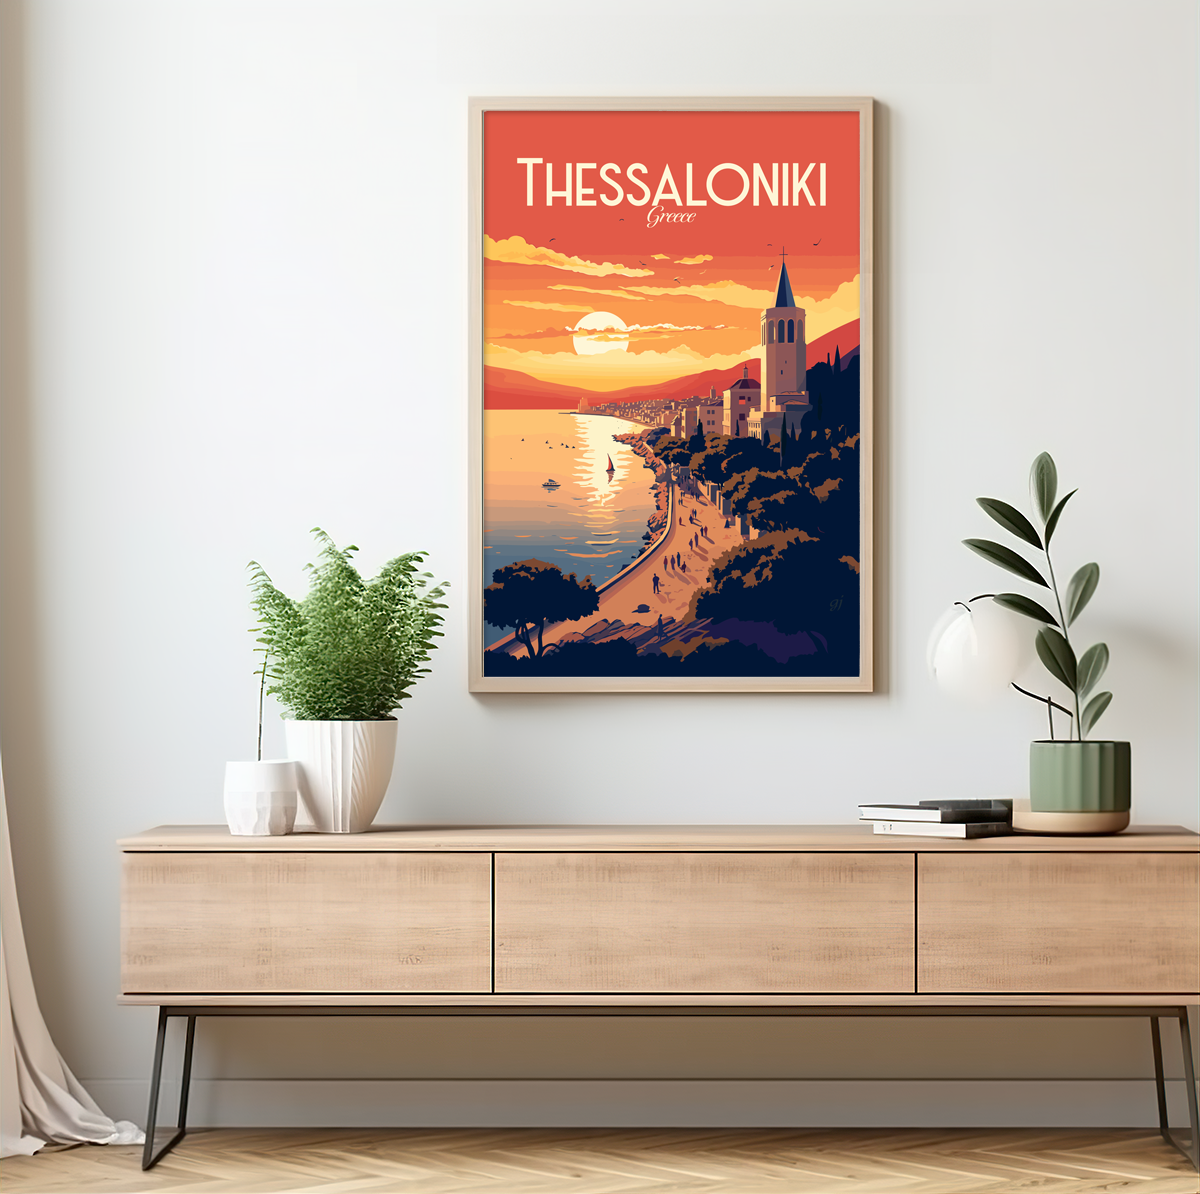 Thessaloniki poster by bon voyage design